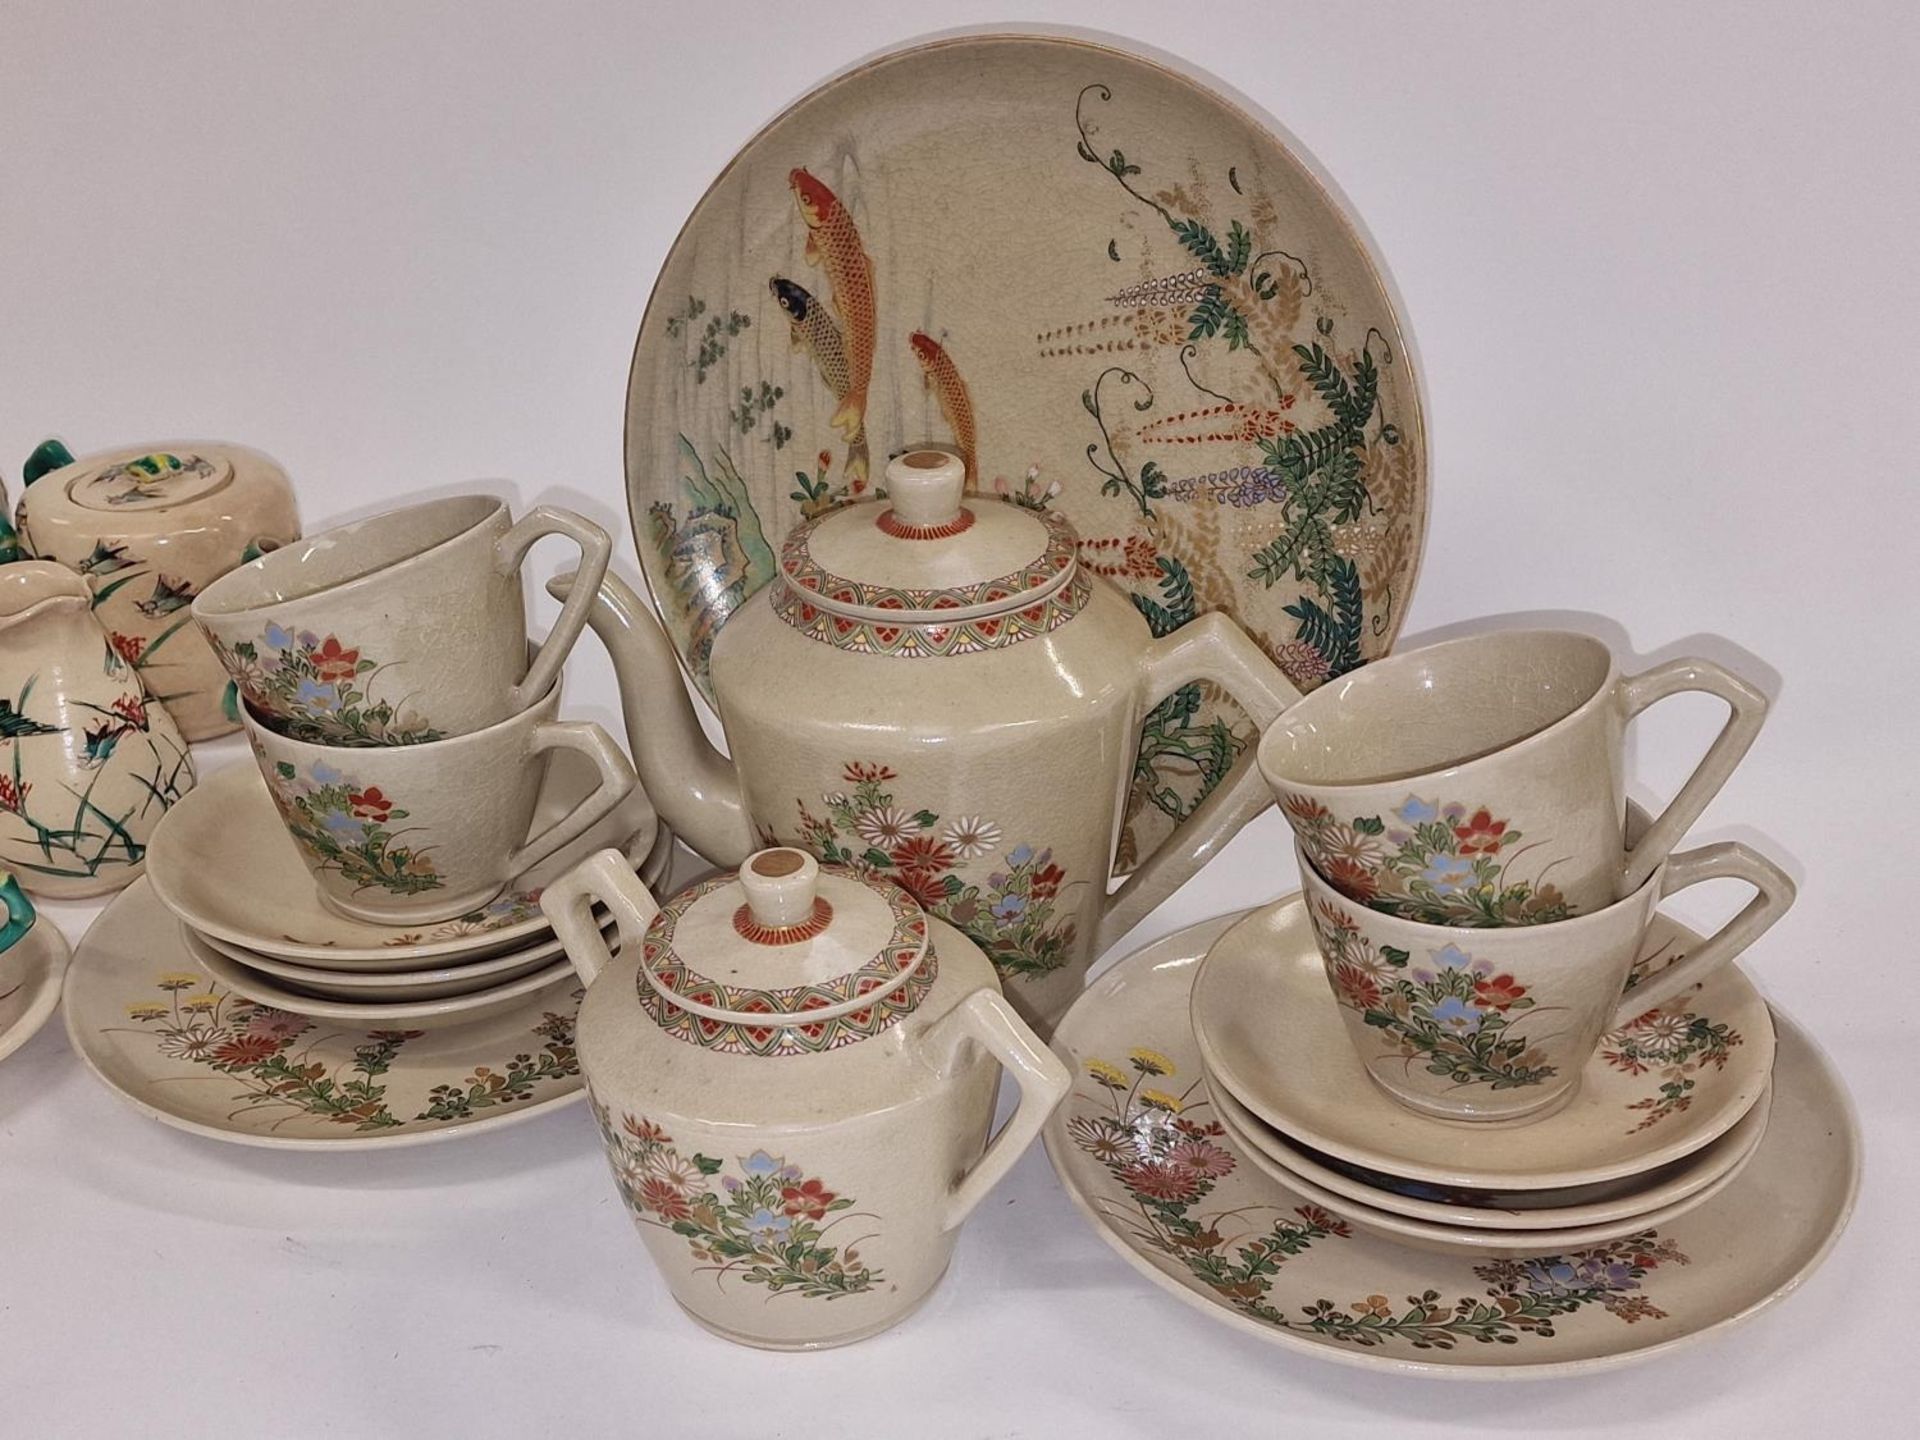 Two vintage oriental pattern part tea sets. - Image 3 of 4